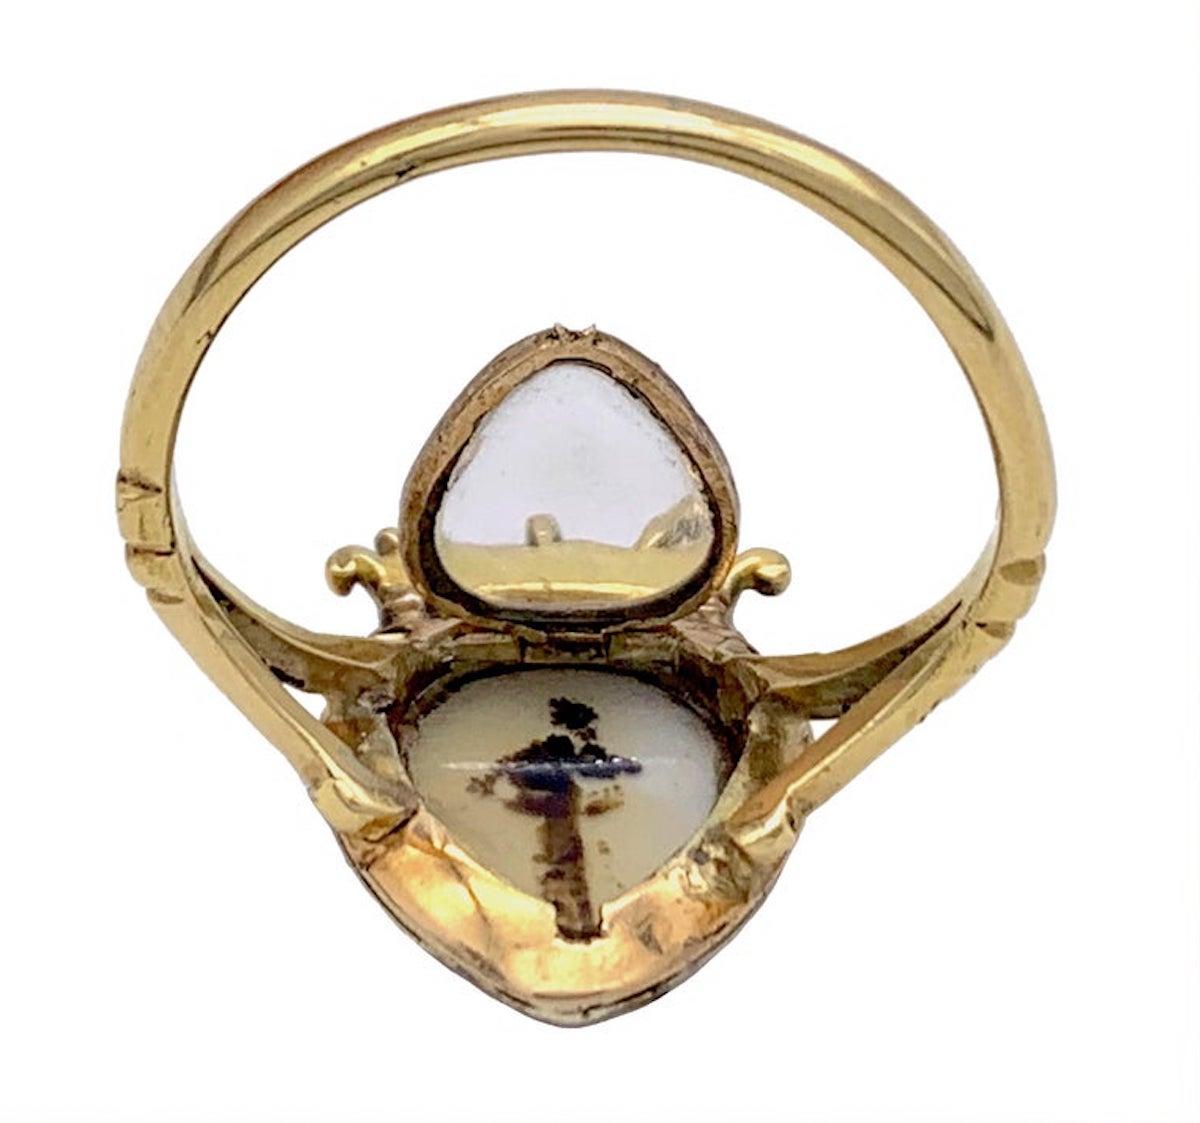 18th century ring